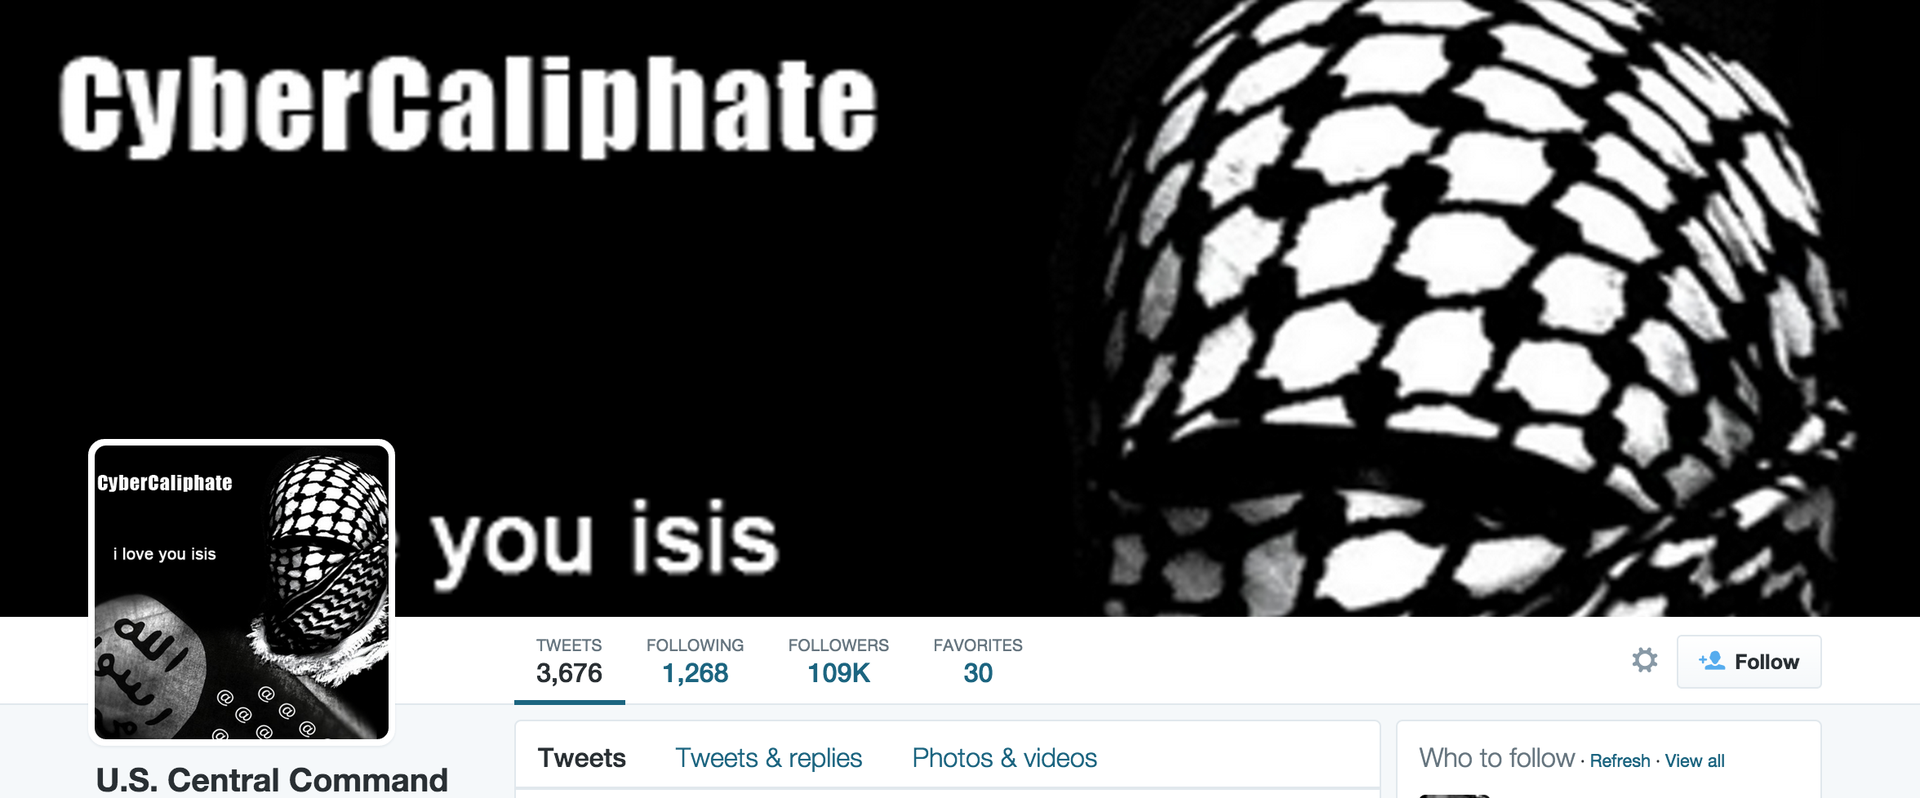 «Кибер-халифат» ИГИЛ взломал аккаунты соцсетей Пентагона - 1